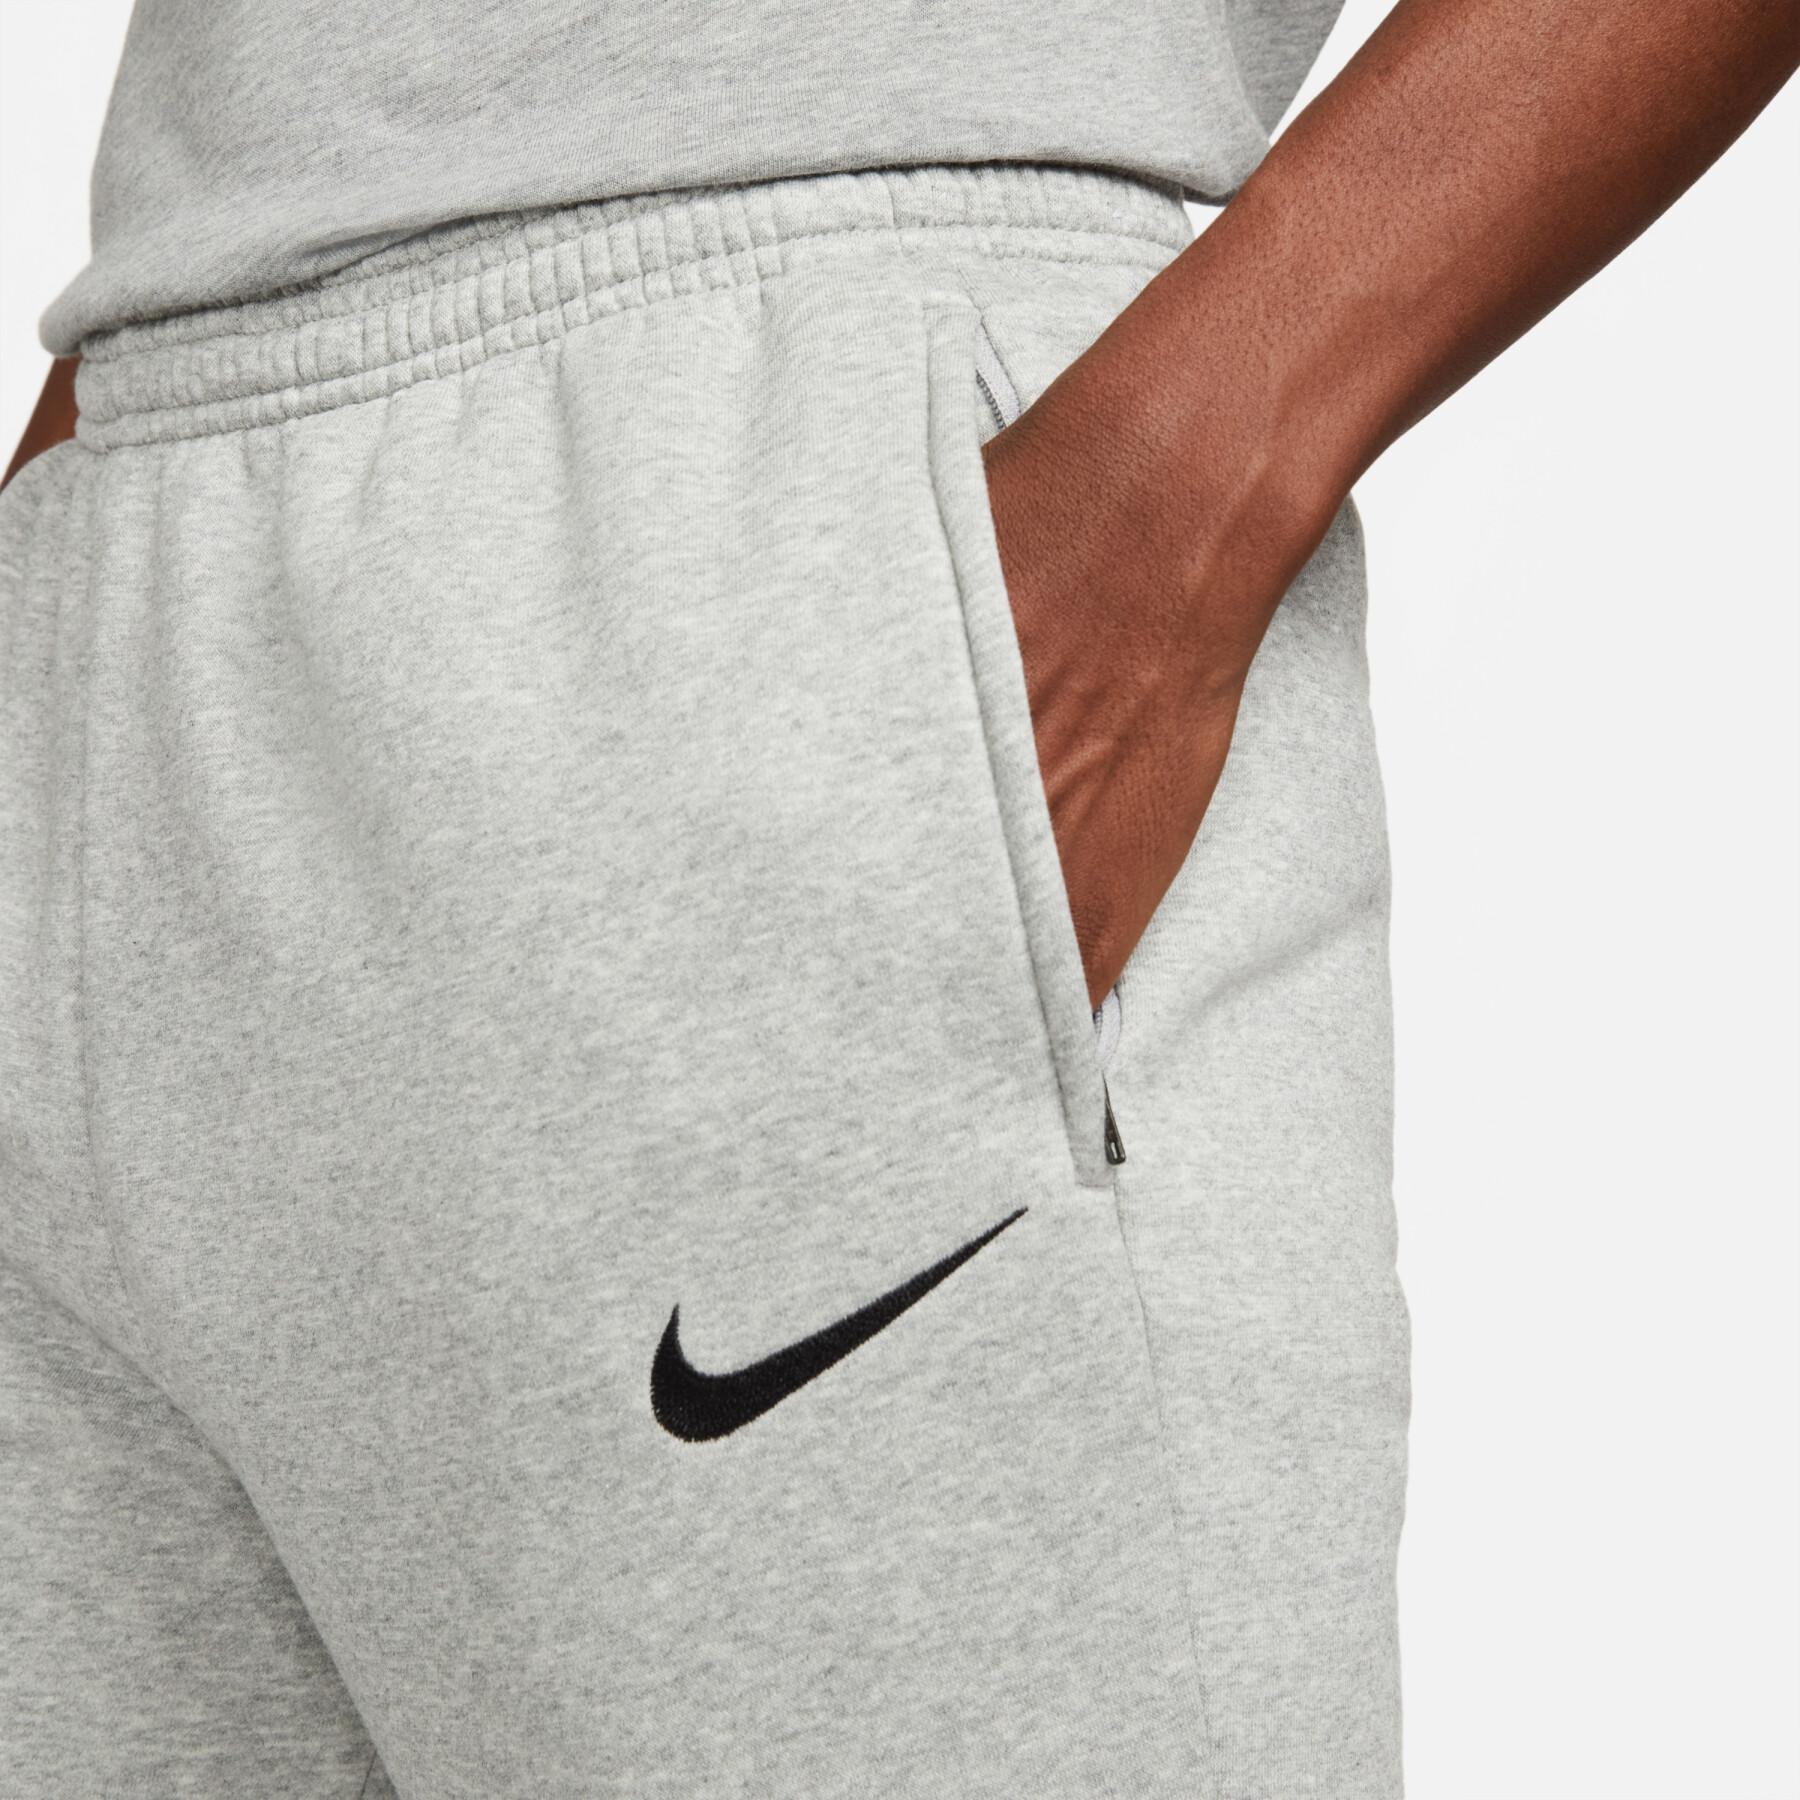 Pantalones Nike Fleece Park20